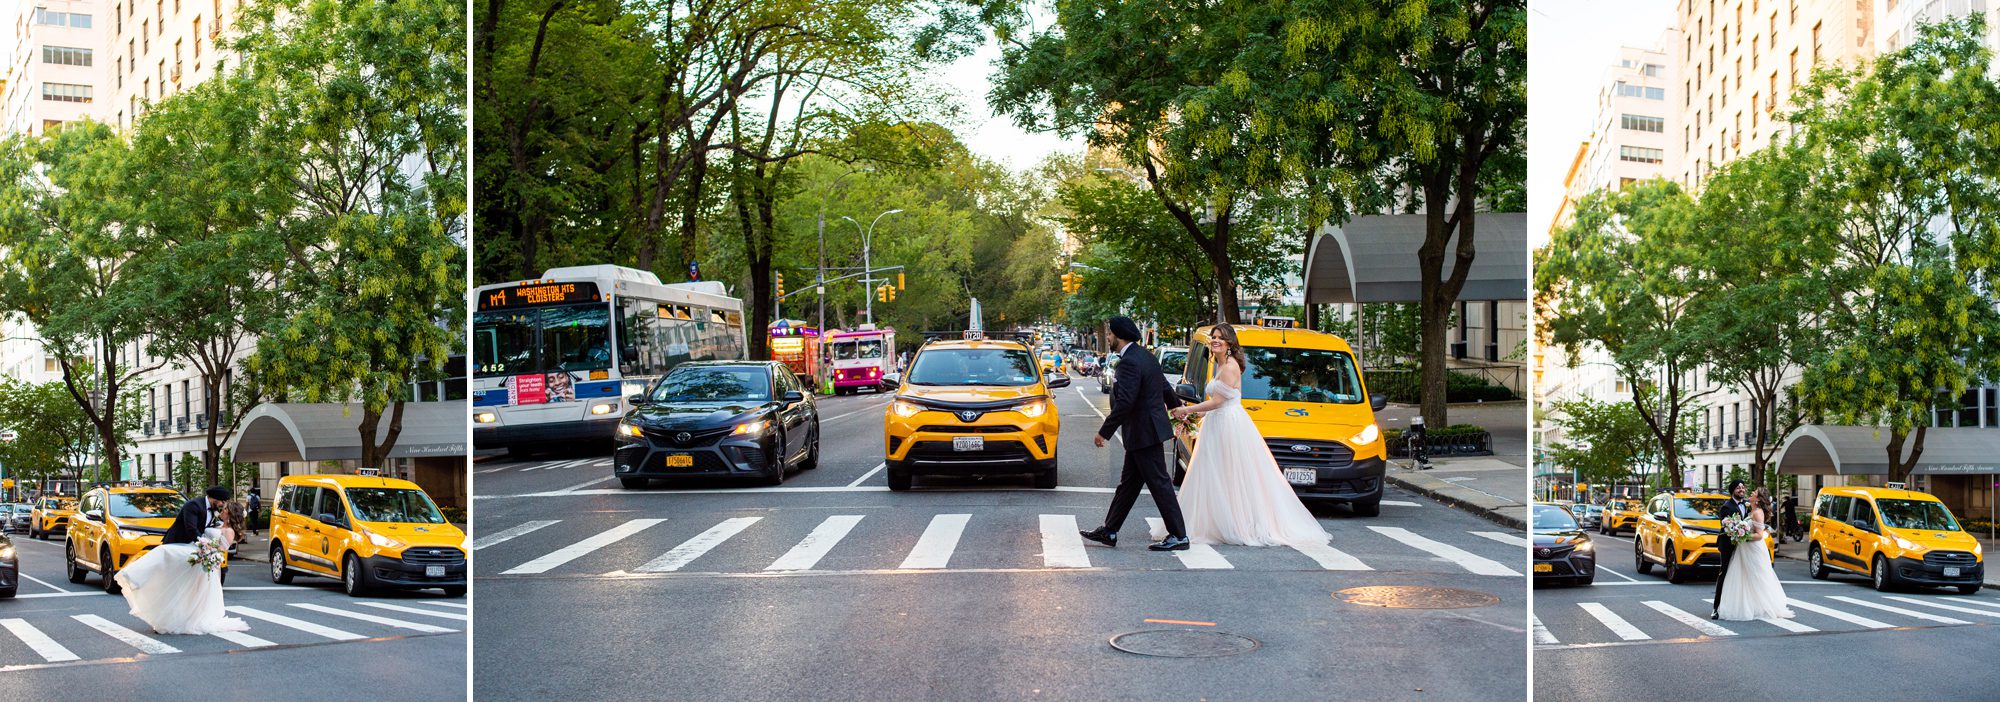 NYC Crosswalk Wedding Photo